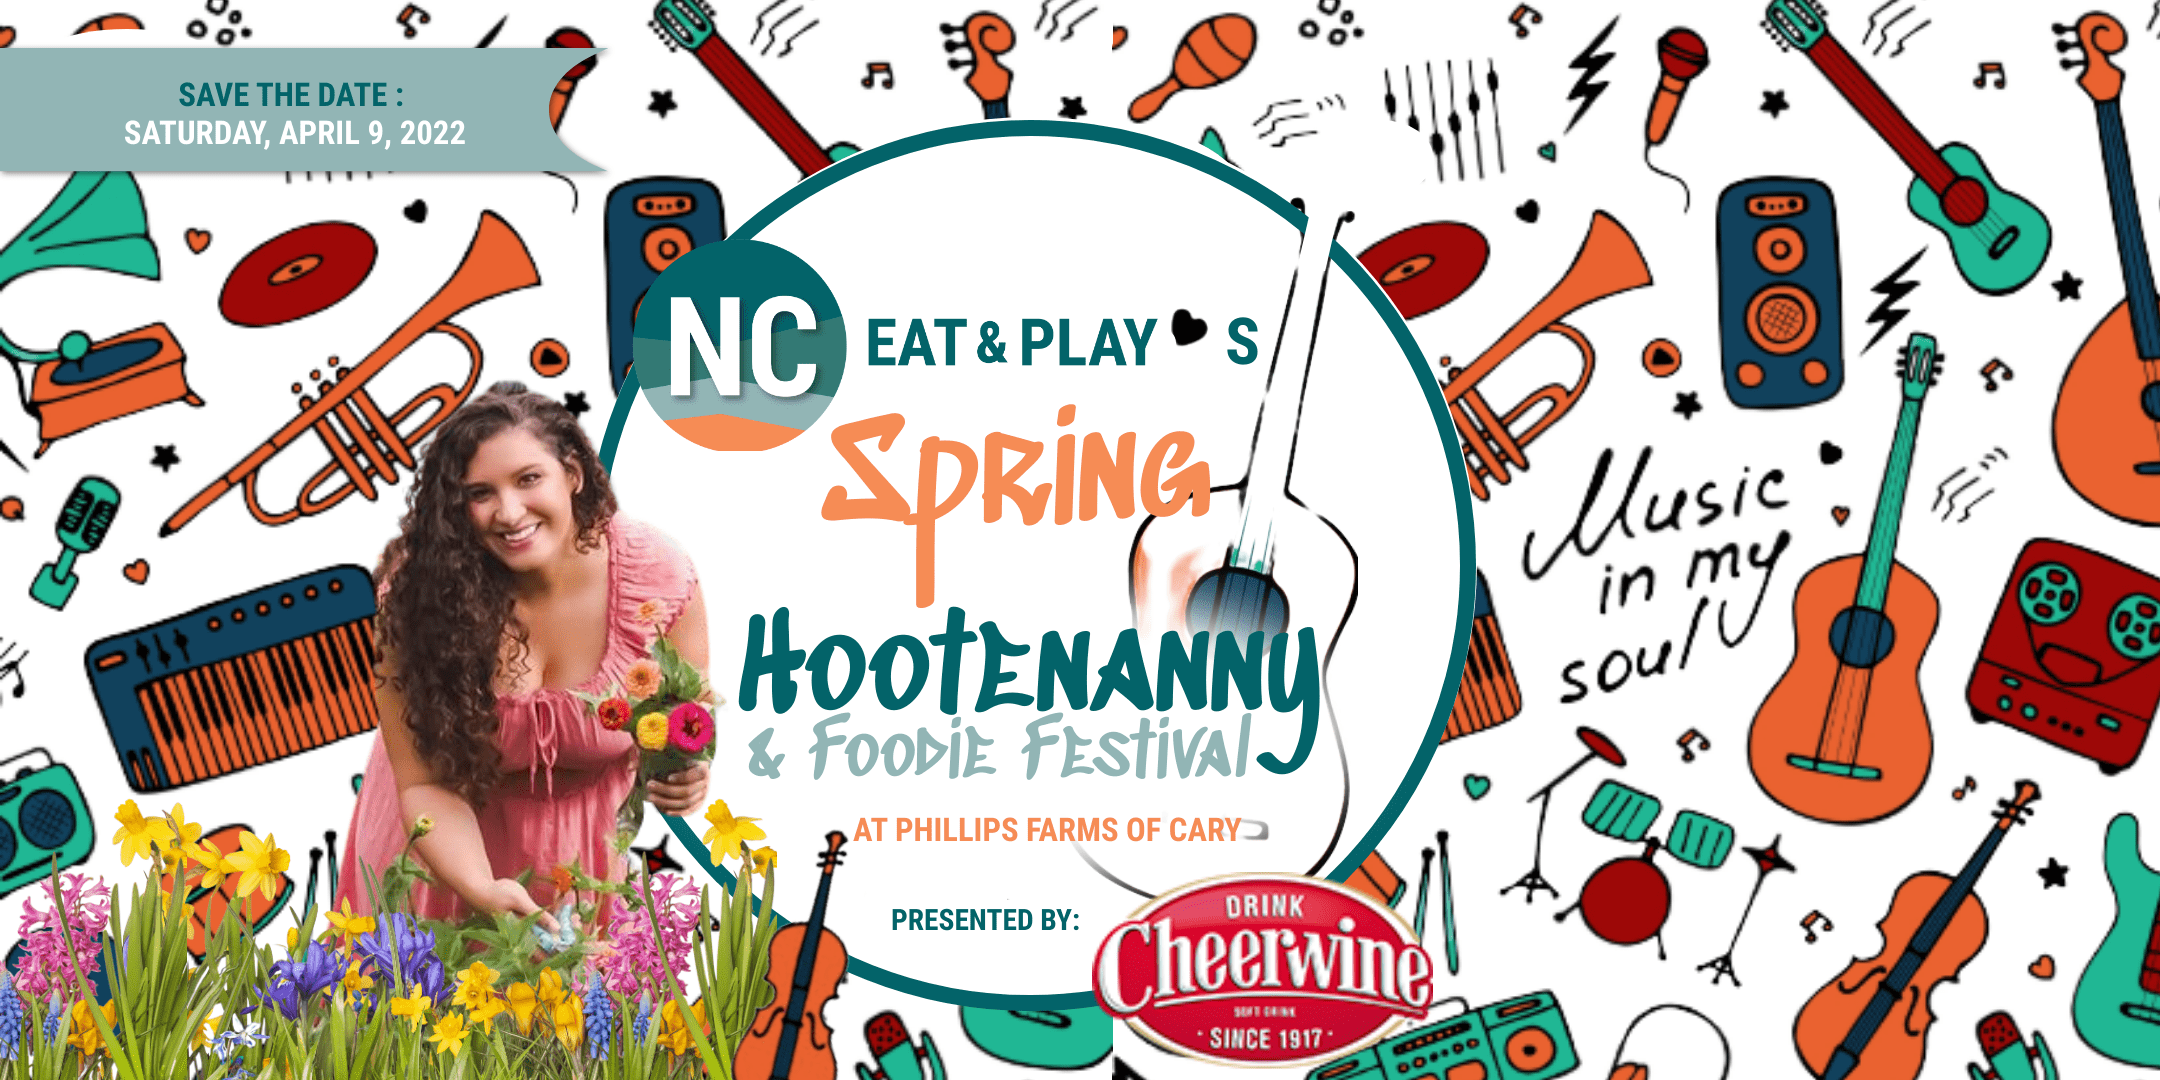 NC Eat & Play Spring Hootenanny & Foodie Festival